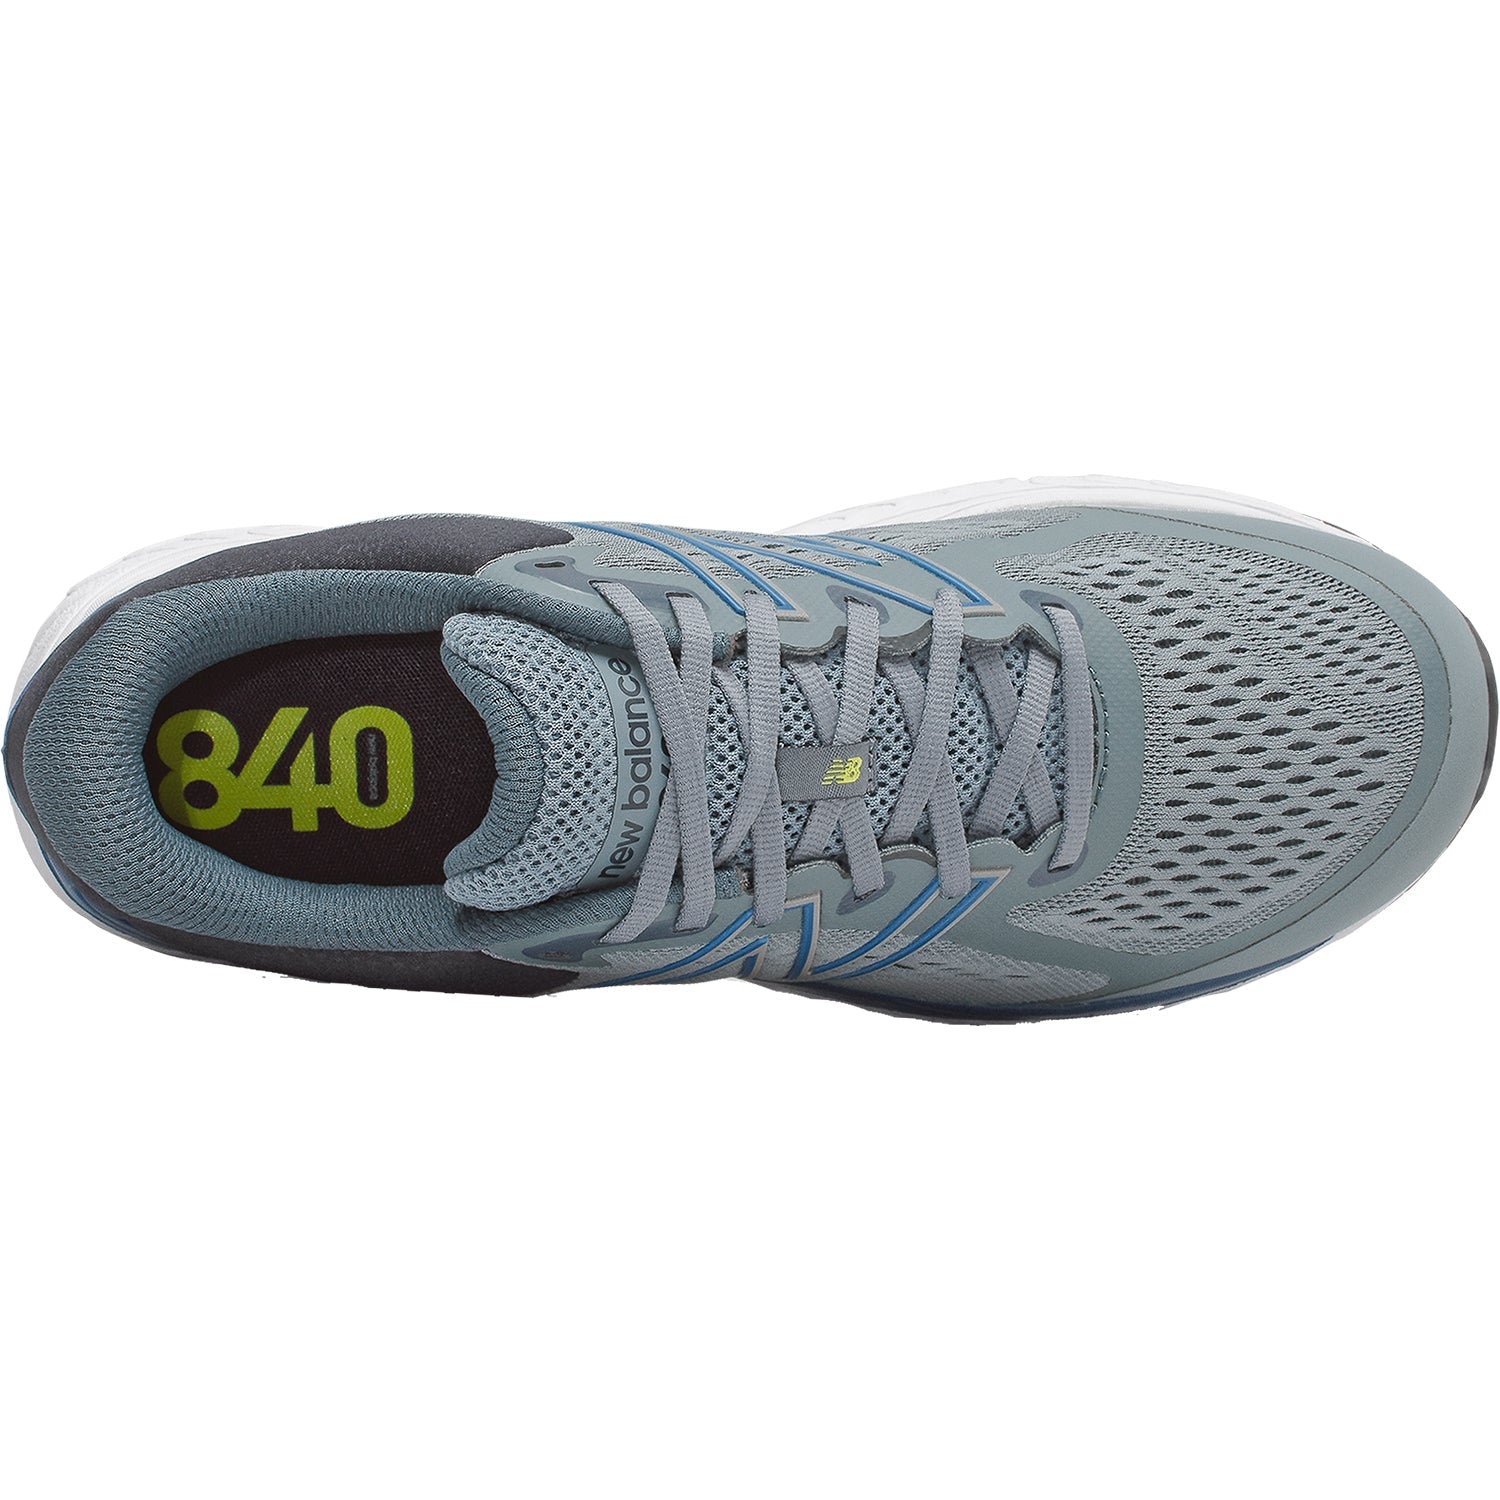 New Balance M840v5 | Men's Sporty Running Shoes | Footwear etc.